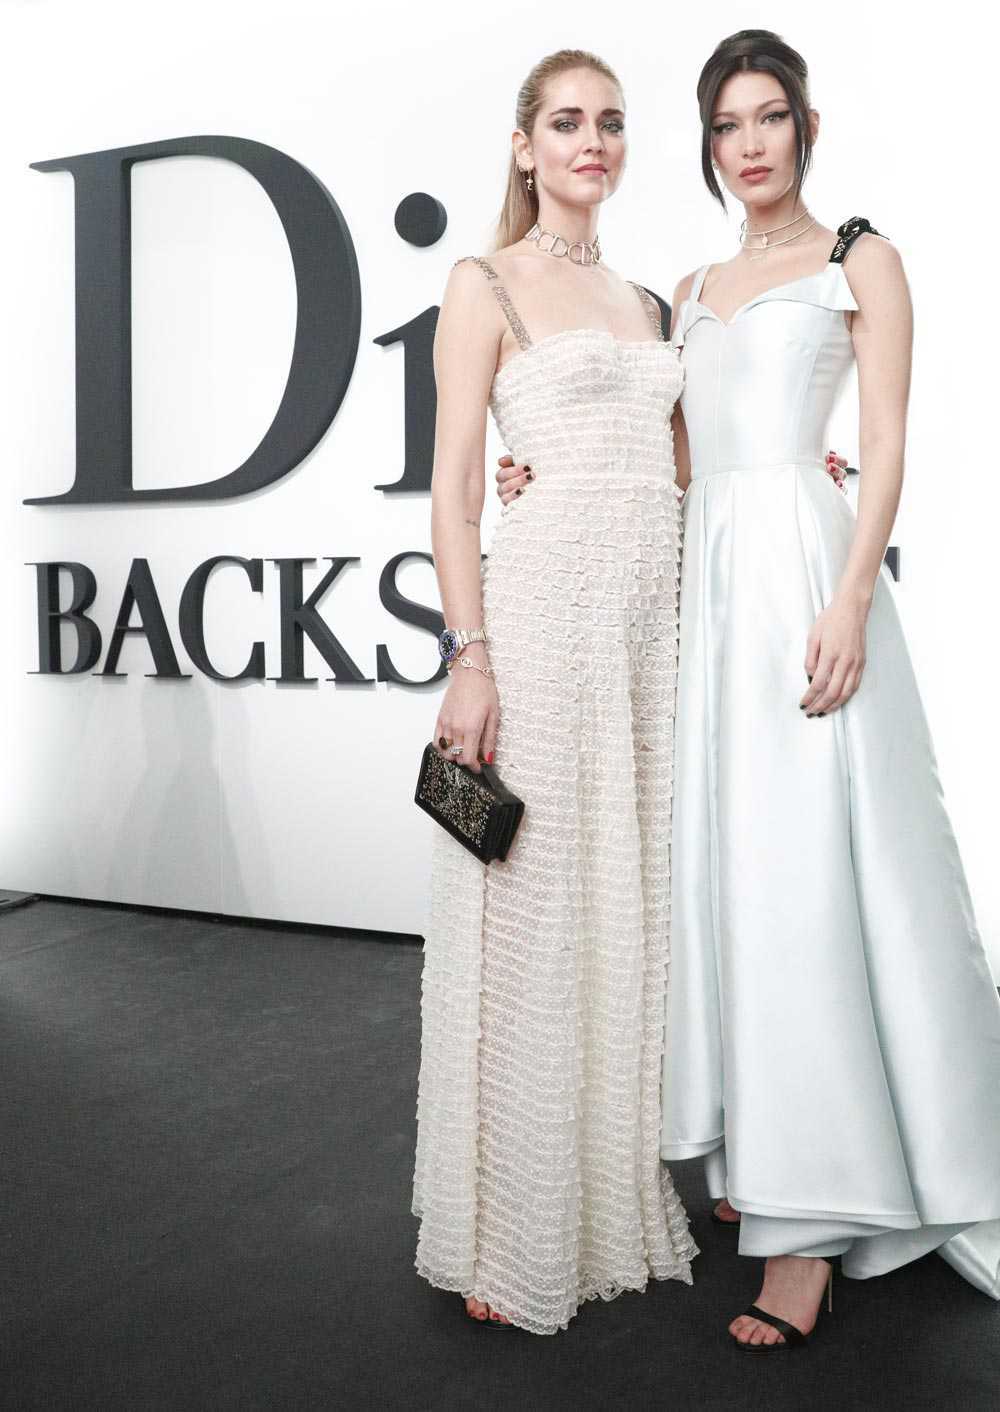 Dior party backstage chiara ferragni bella hadid